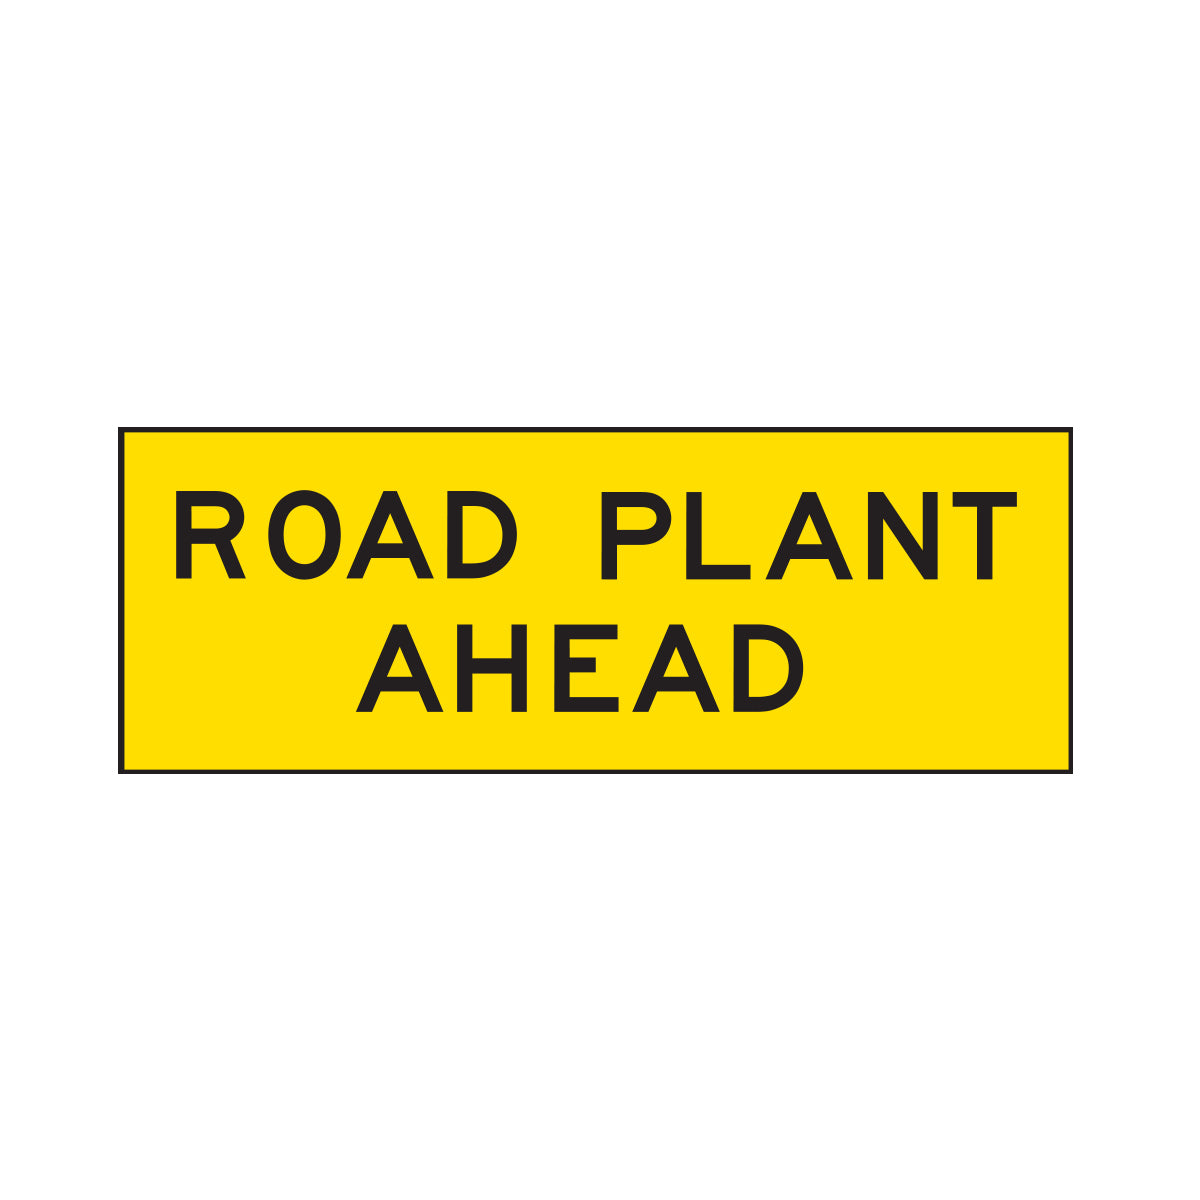 Warning: Road Plant Ahead Sign